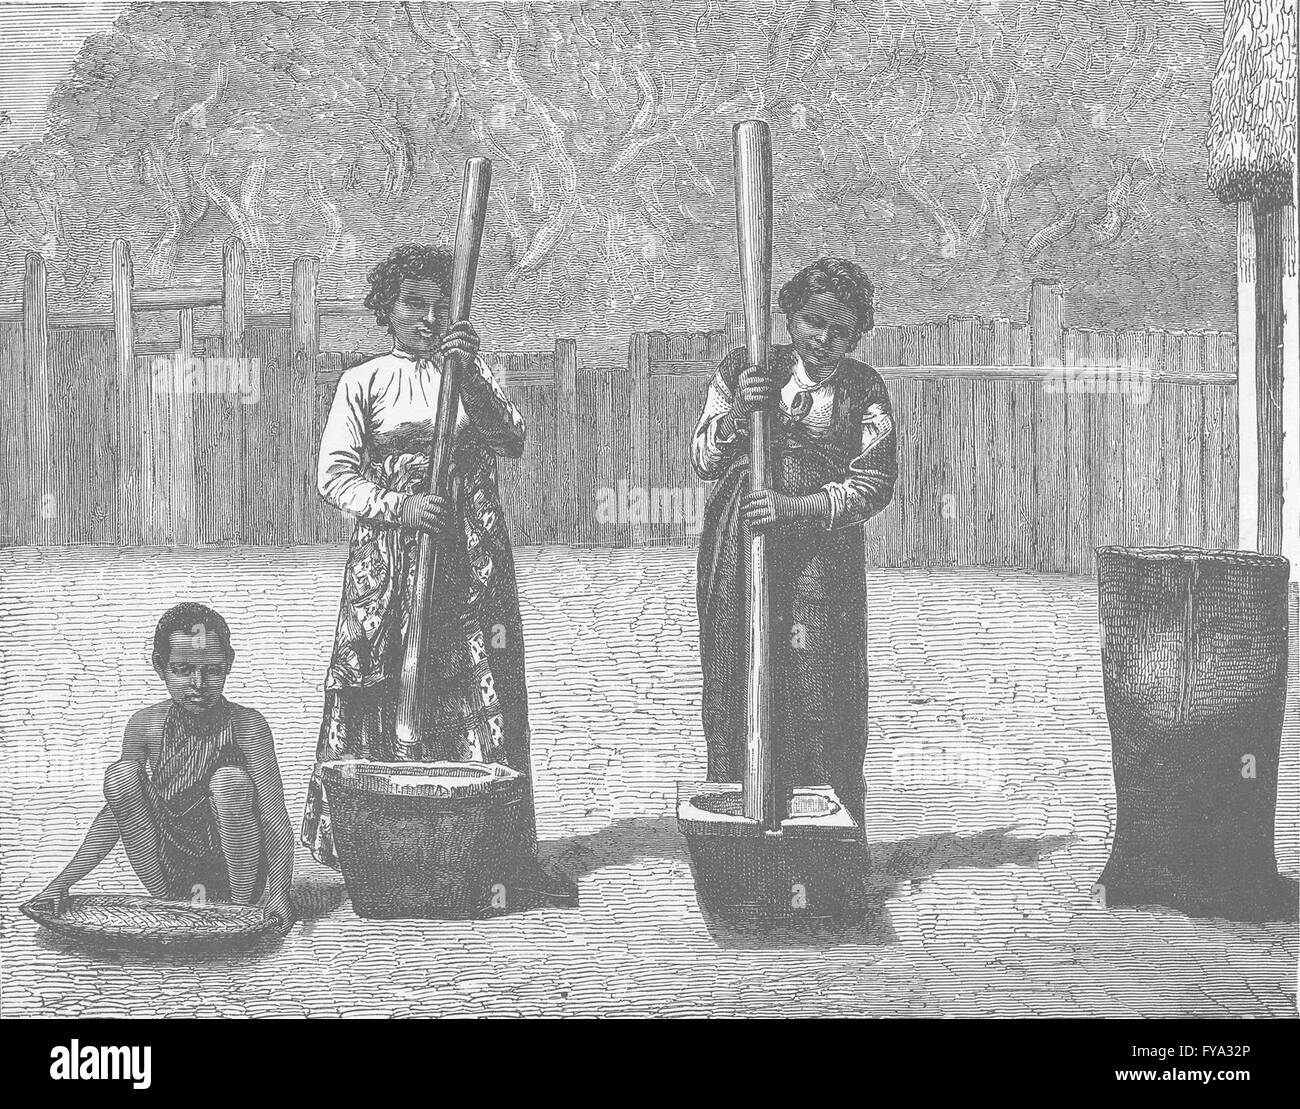 MADAGASCAR: Natives of Madagascar pounding rice, antique print 1890 Stock Photo